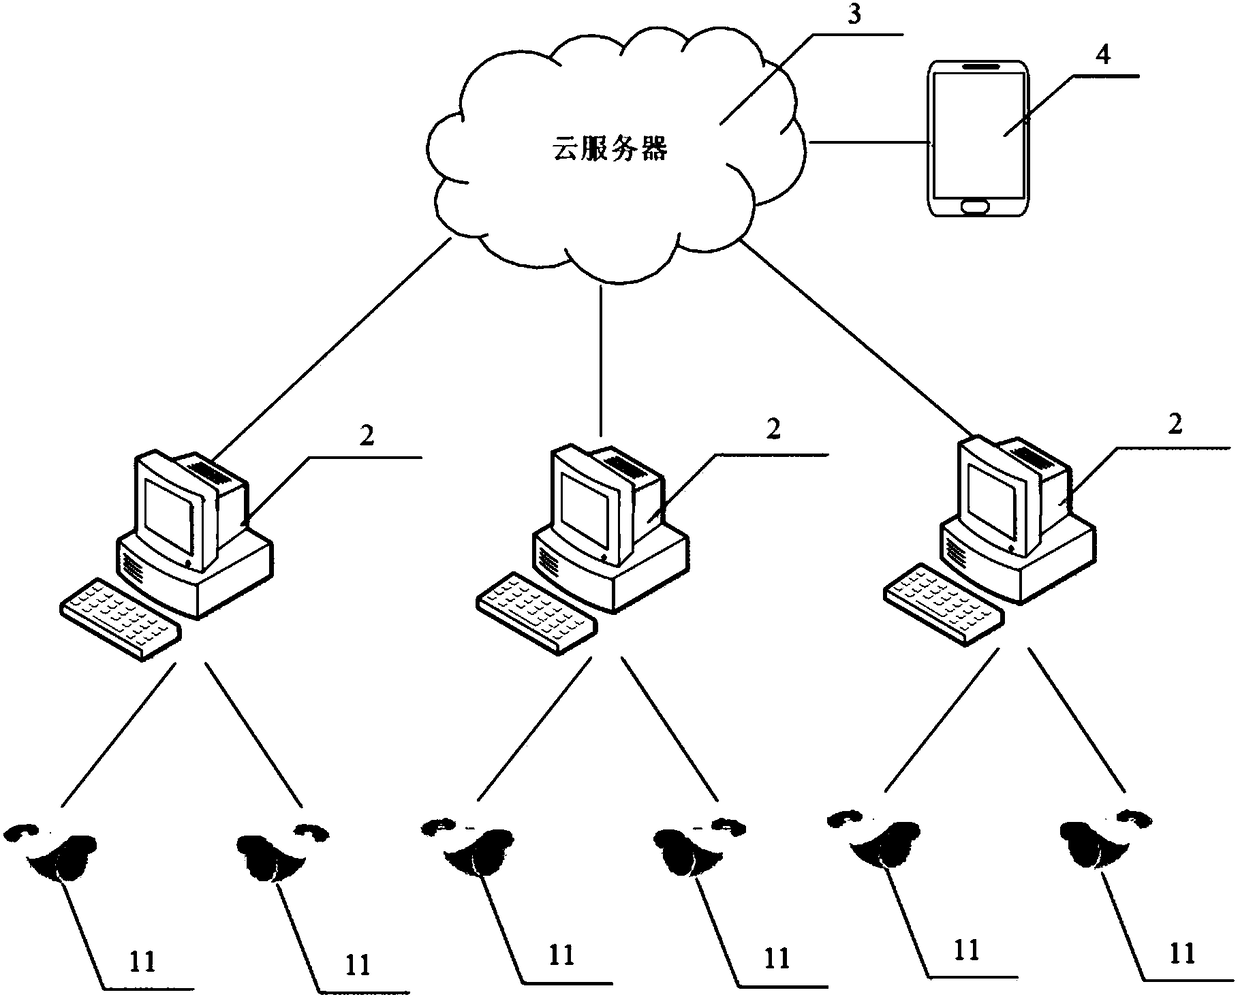 Rat infestation intelligent monitoring system and method based on cloud server